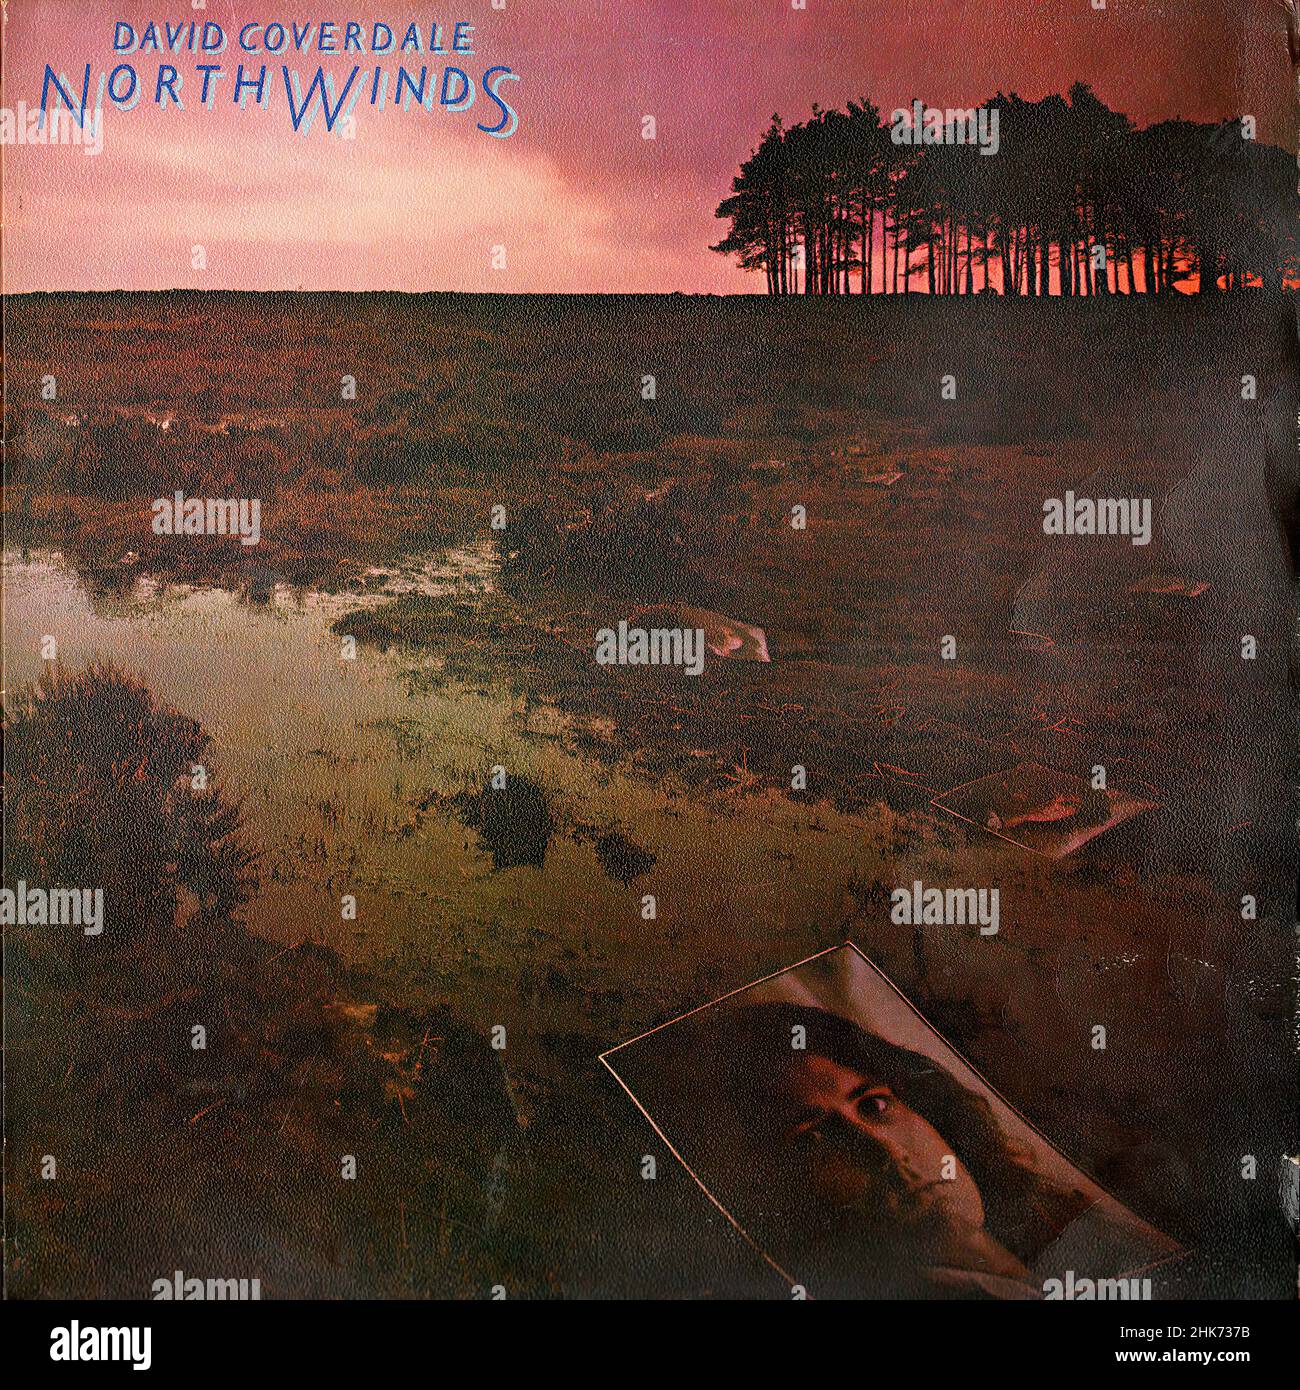 Vintage vinyl record cover - David Coverdale - Northwinds  - UK - 1978 Stock Photo